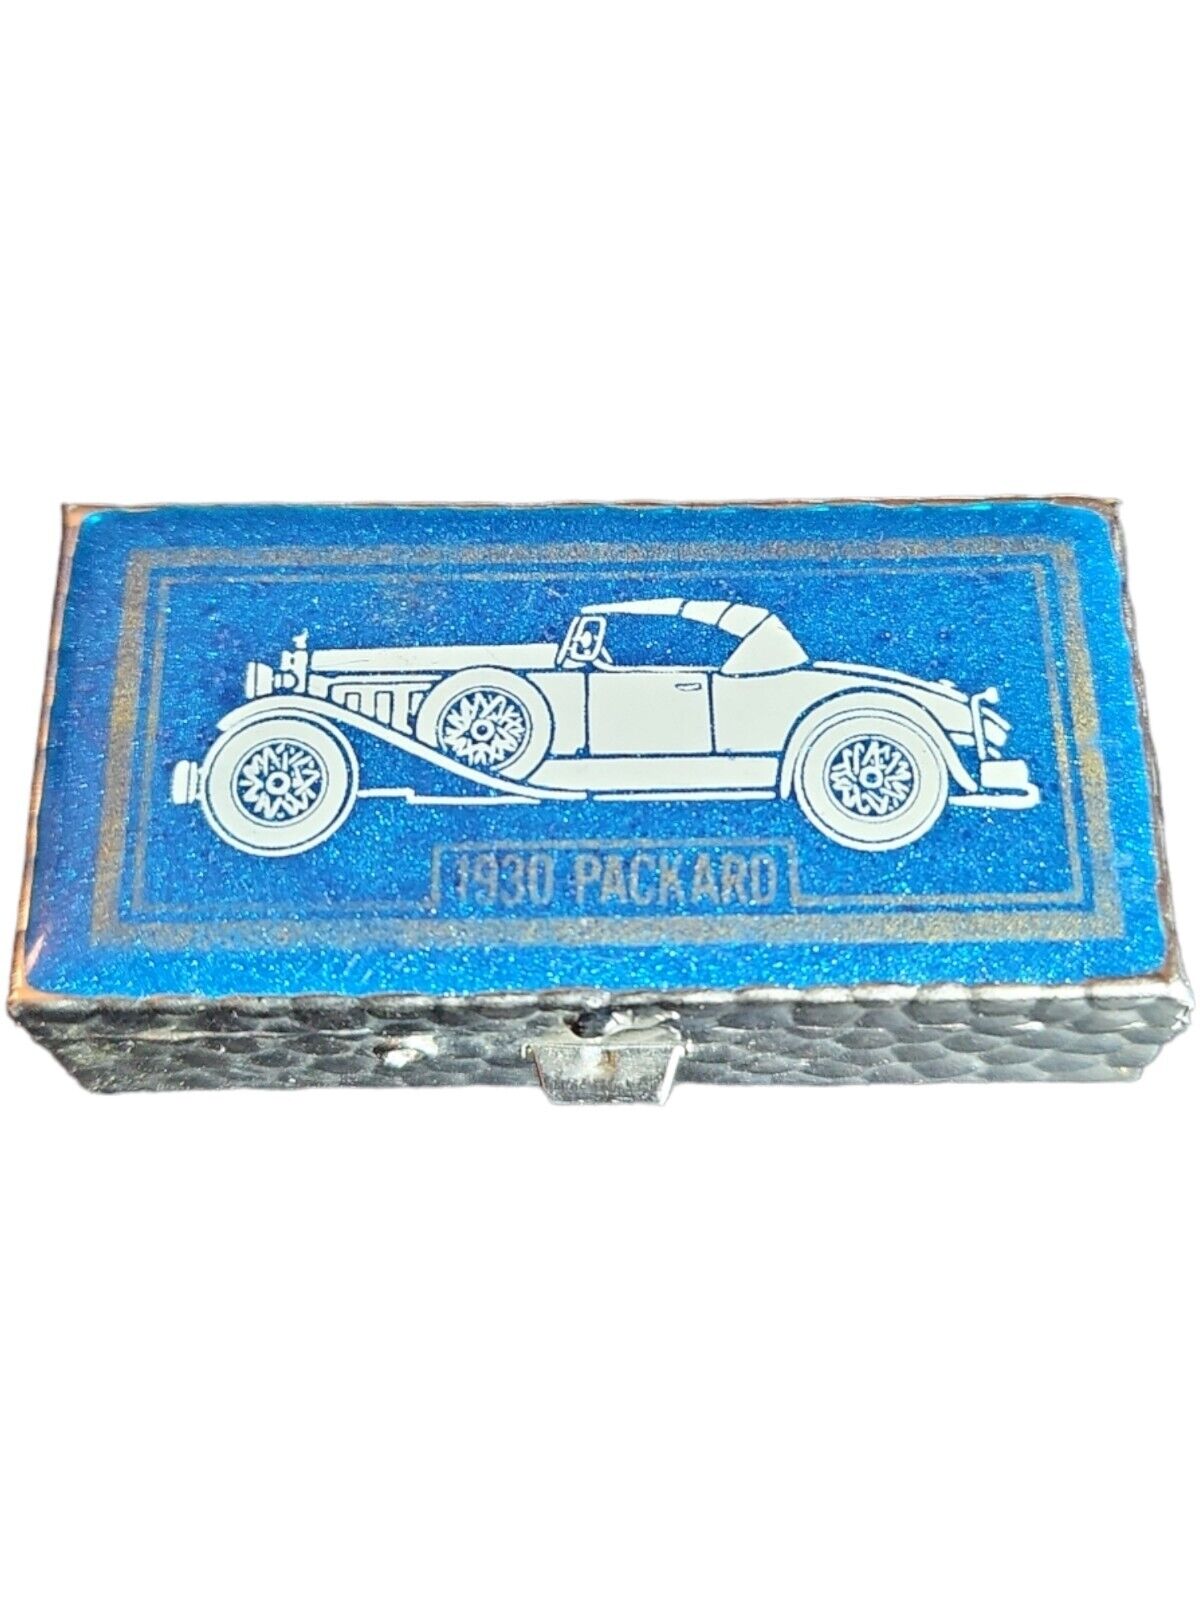 VTG Silvertone Enameled Metal Pill Box w/ 1930s Packard 